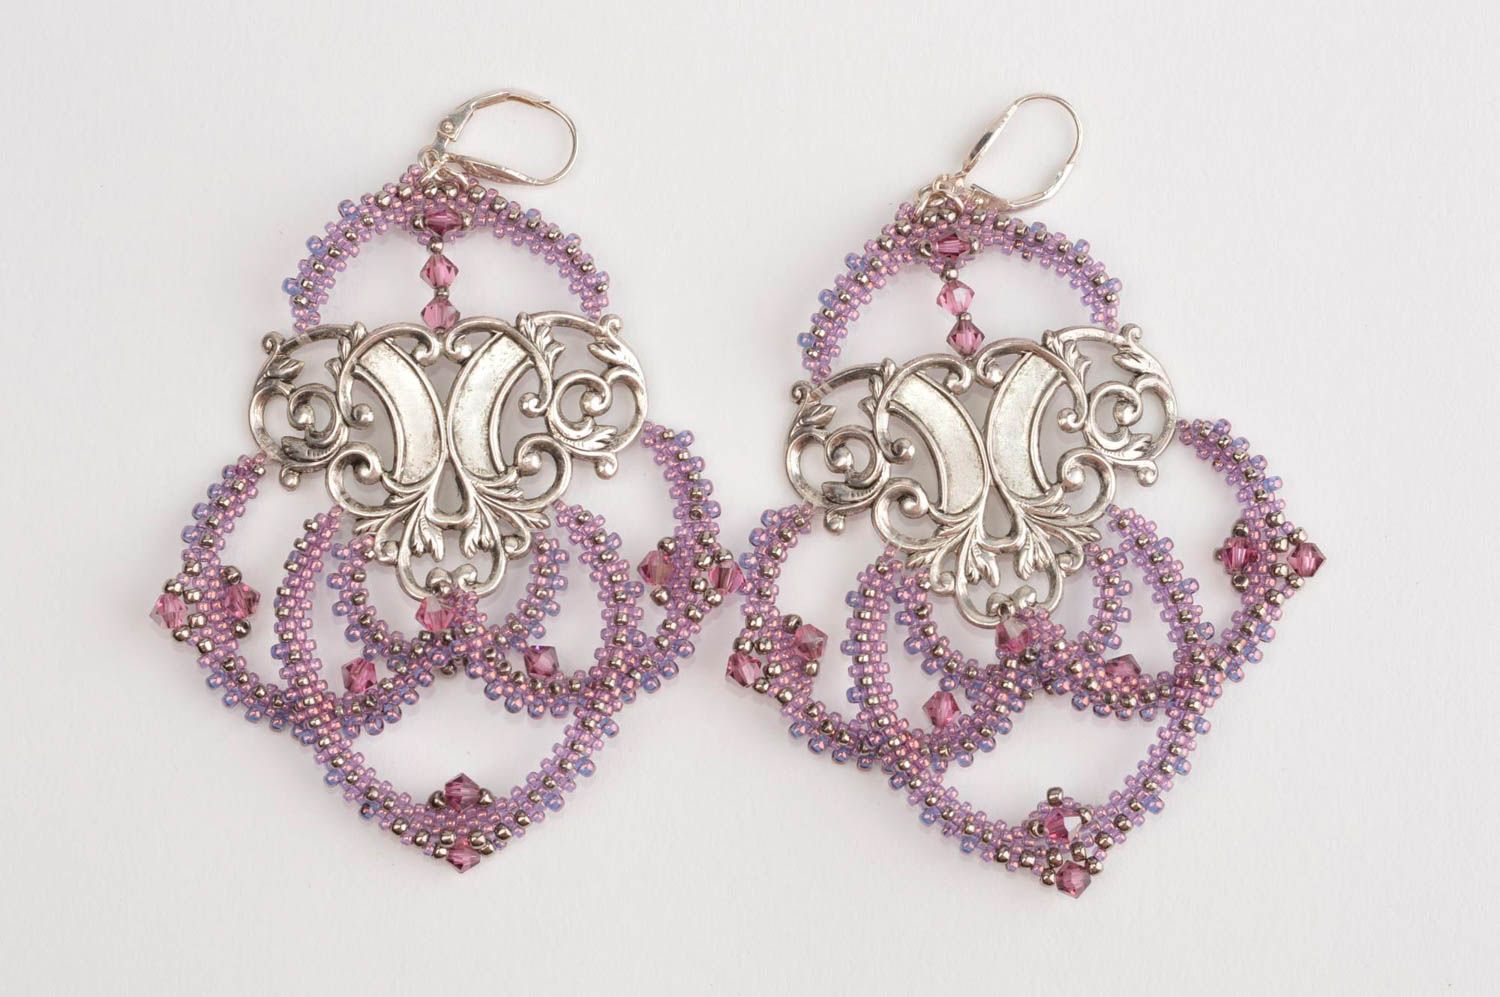 Handmade earrings with beads shiny earrings evening earrings for girls photo 2